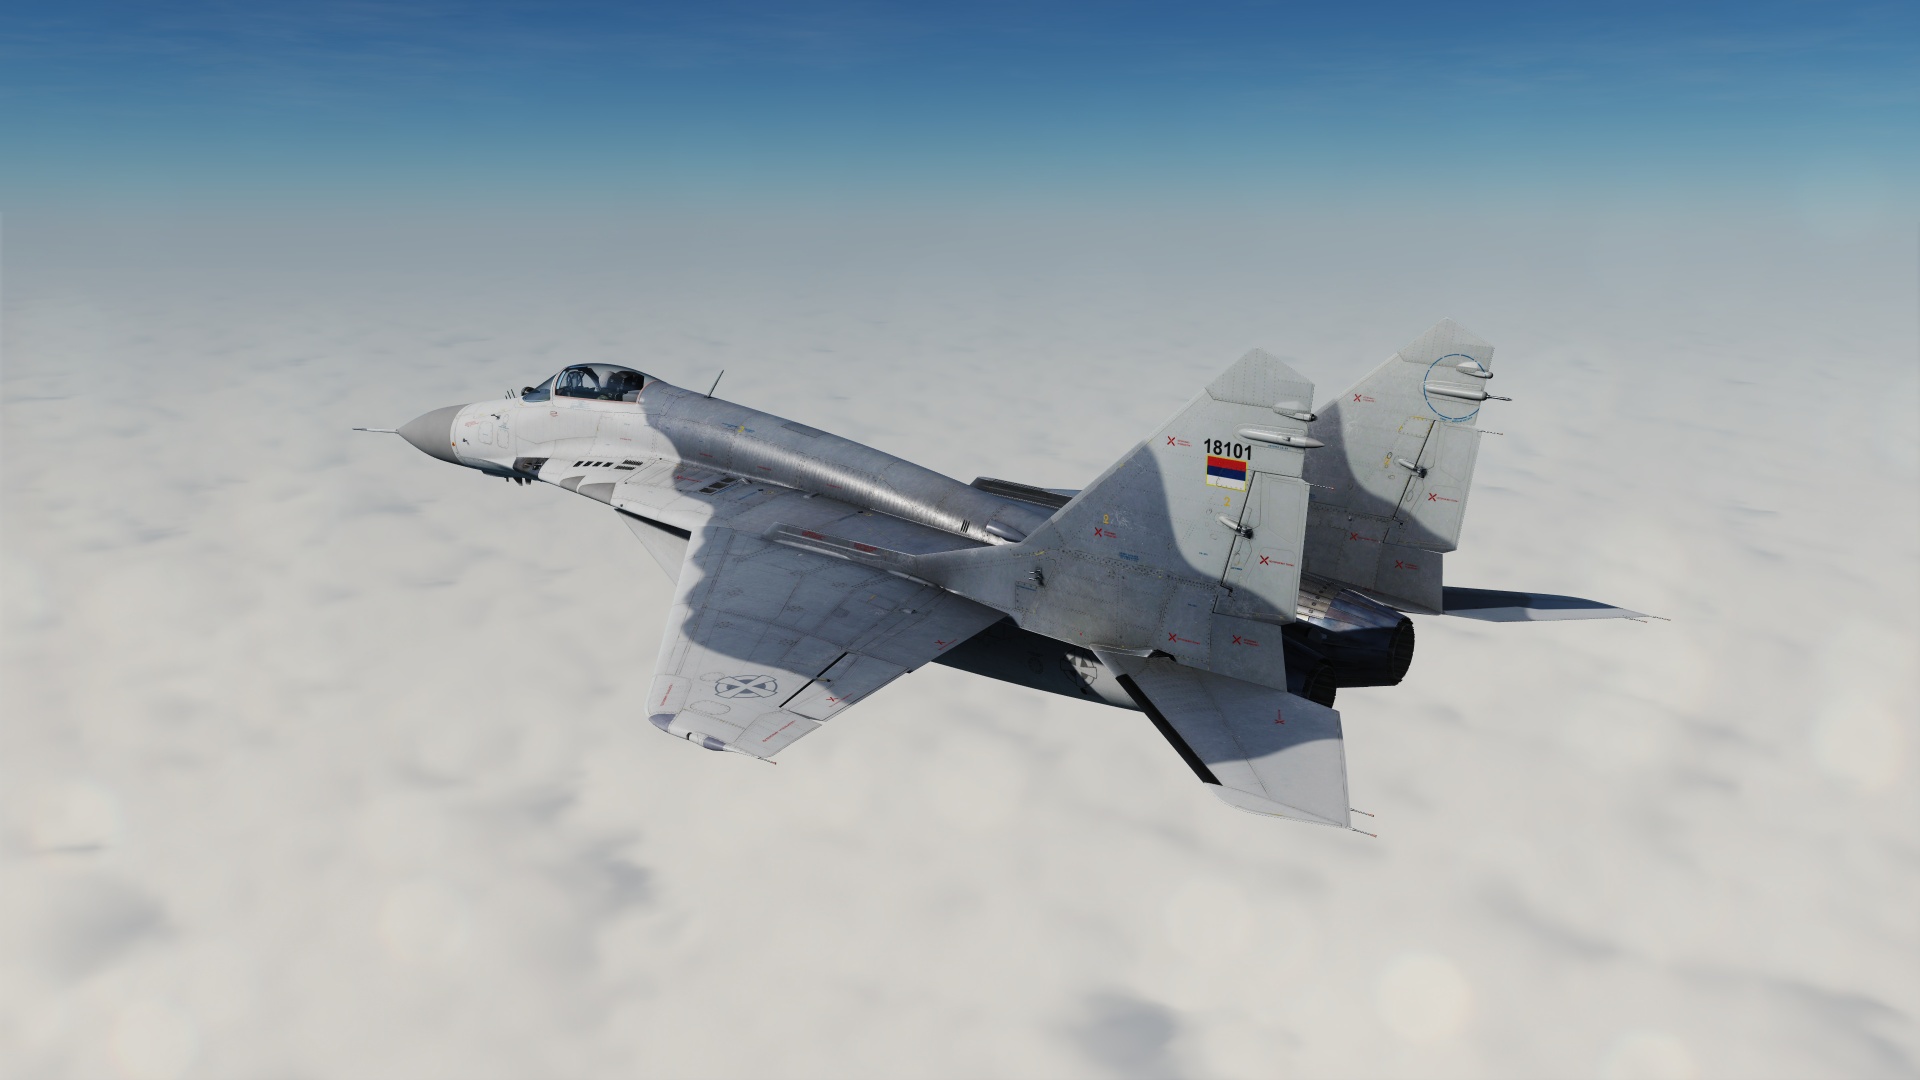 Serbian Air Force LAE "Vitezovi" MiG-29 Low Vis